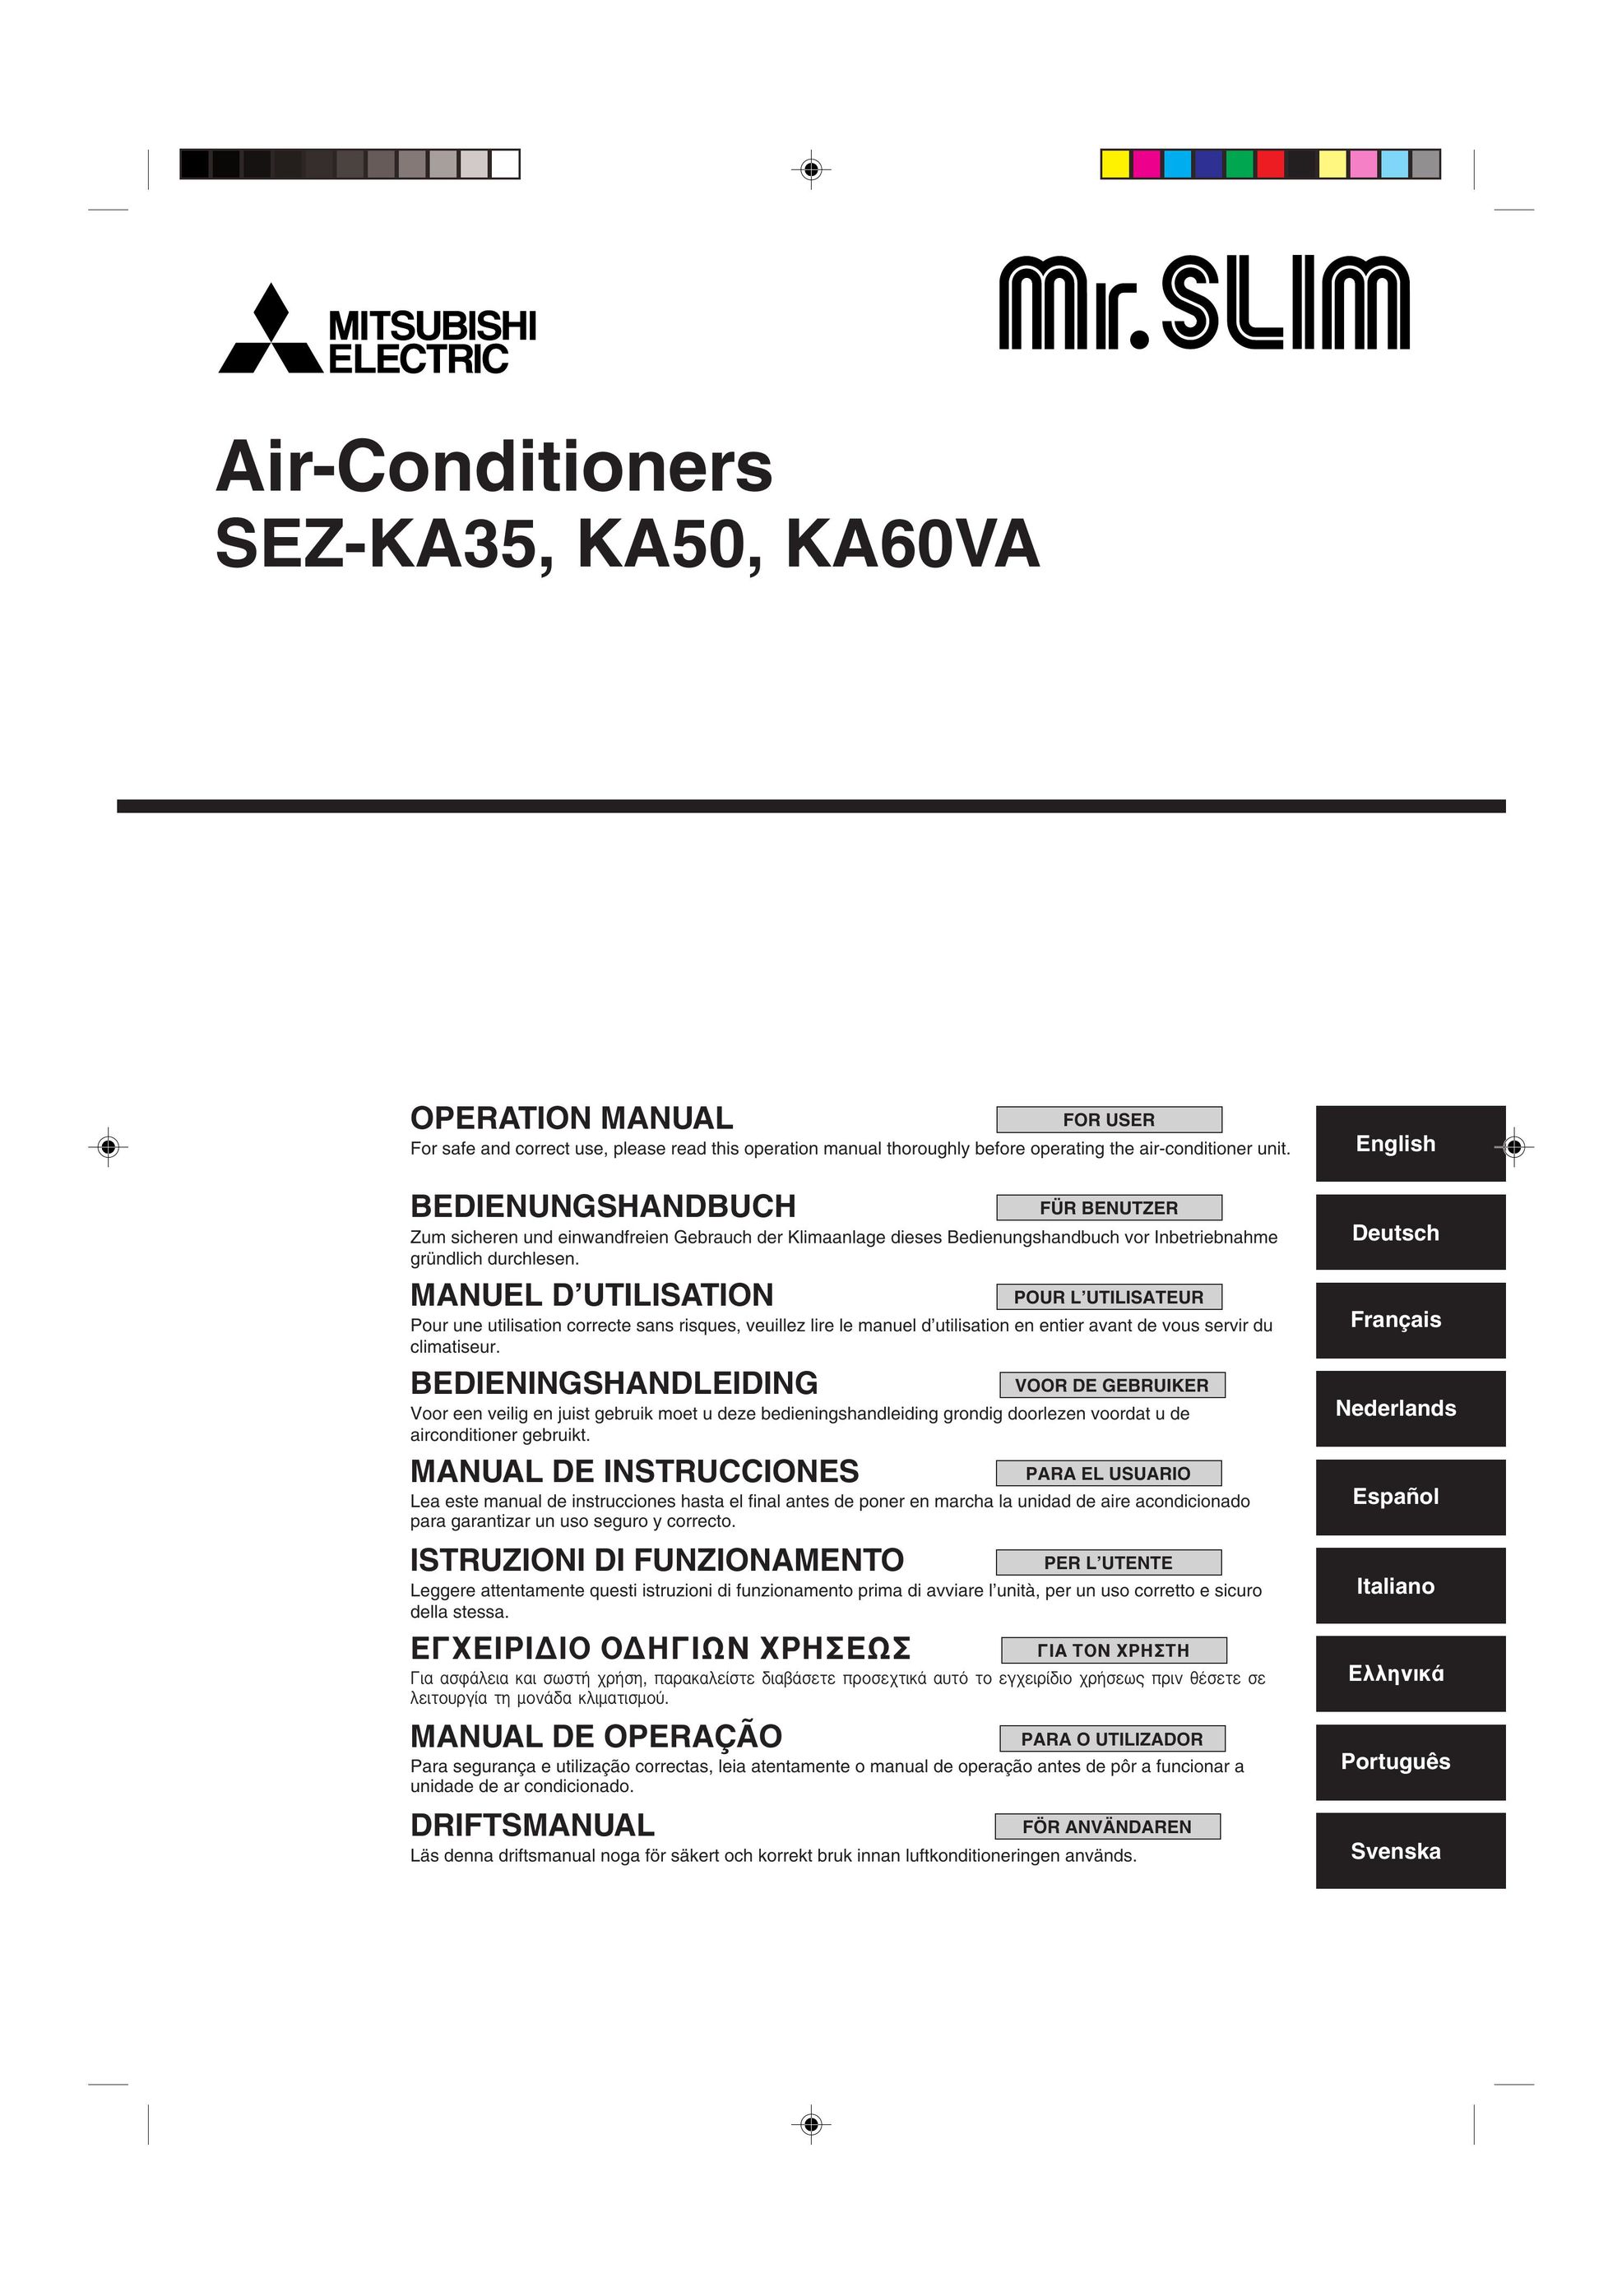 Mitsubishi Electronics KA60VA Air Conditioner User Manual